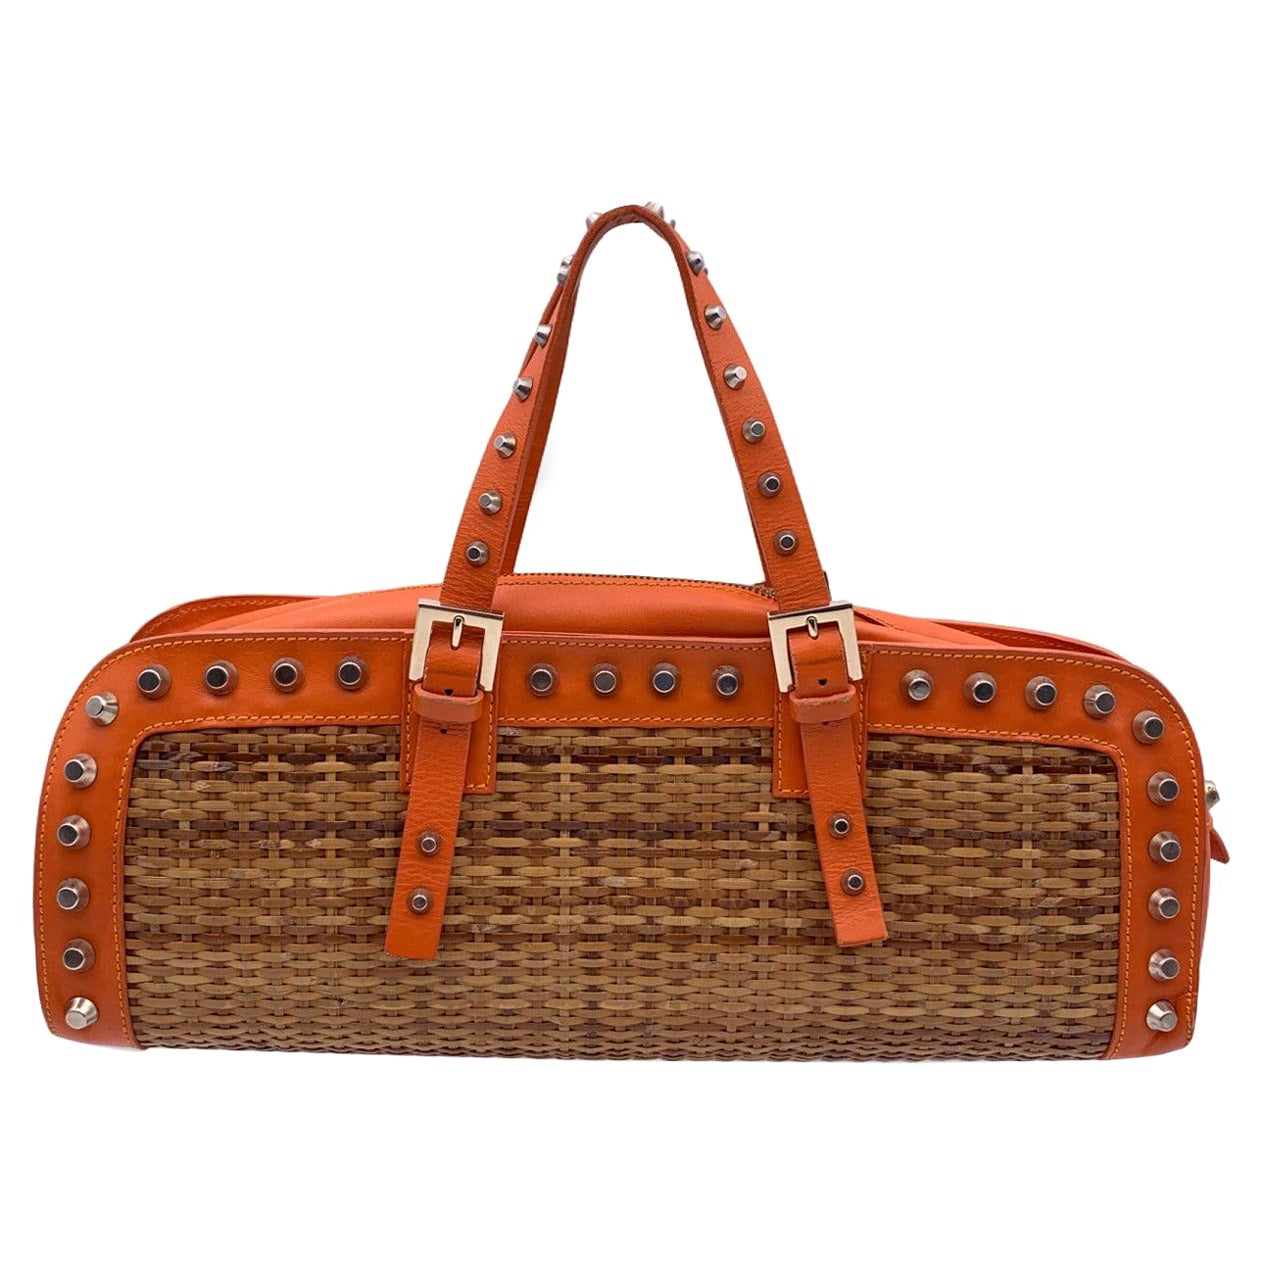 Fendi Wicker and Orange Leather Studded Tote Handbag Satchel For Sale